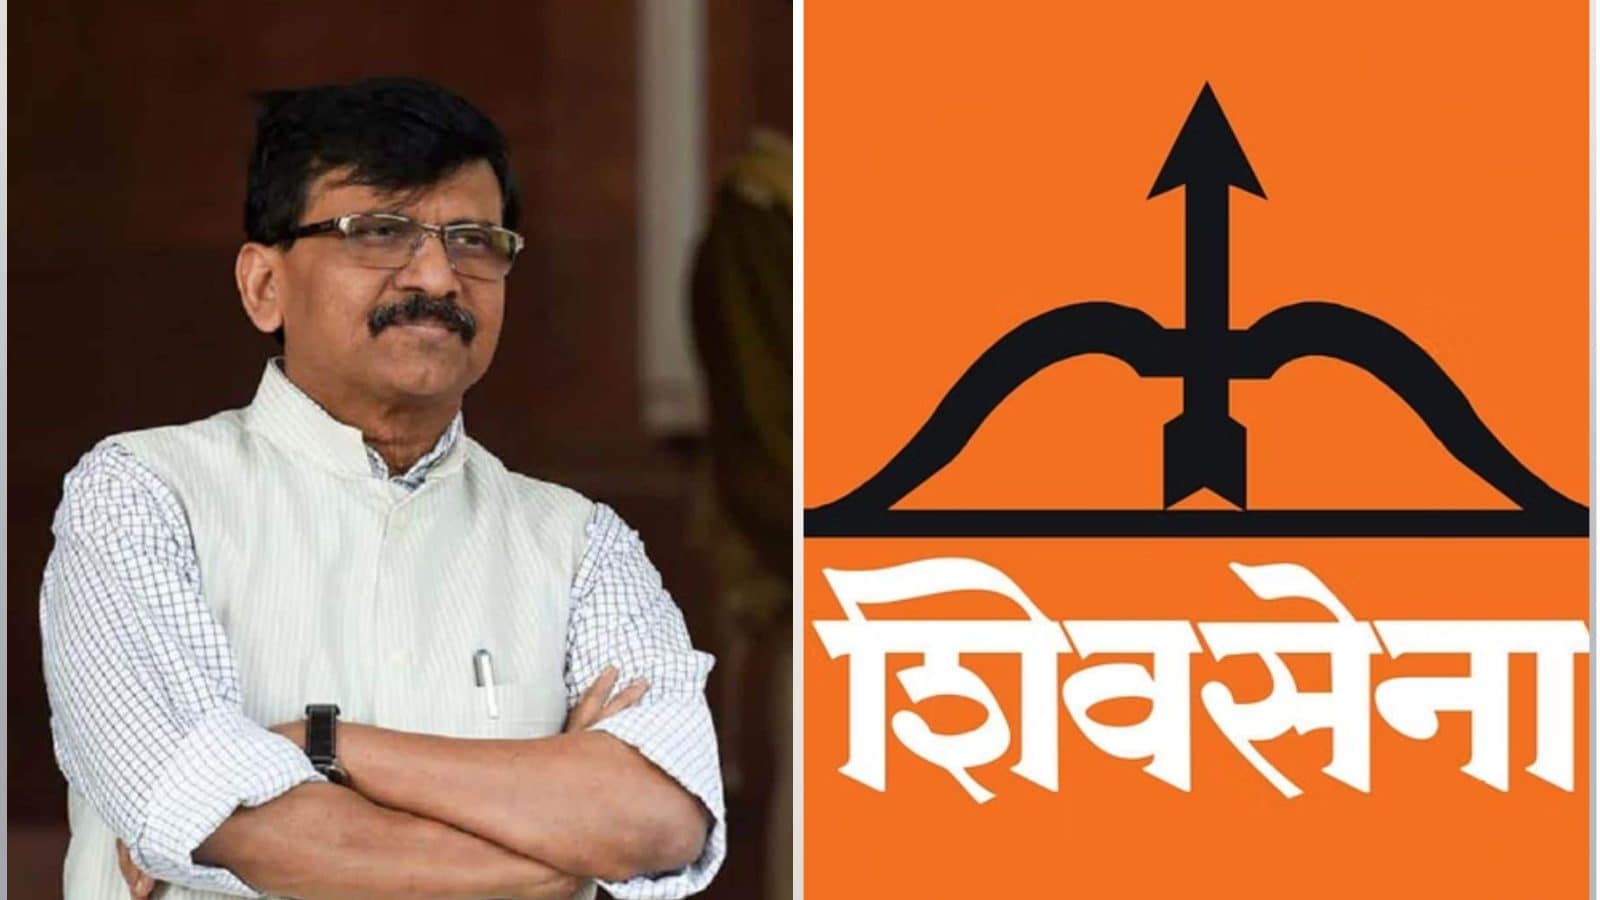 It's back to Hindutva for Shiv Sena after 11 August | Vivek Kaul